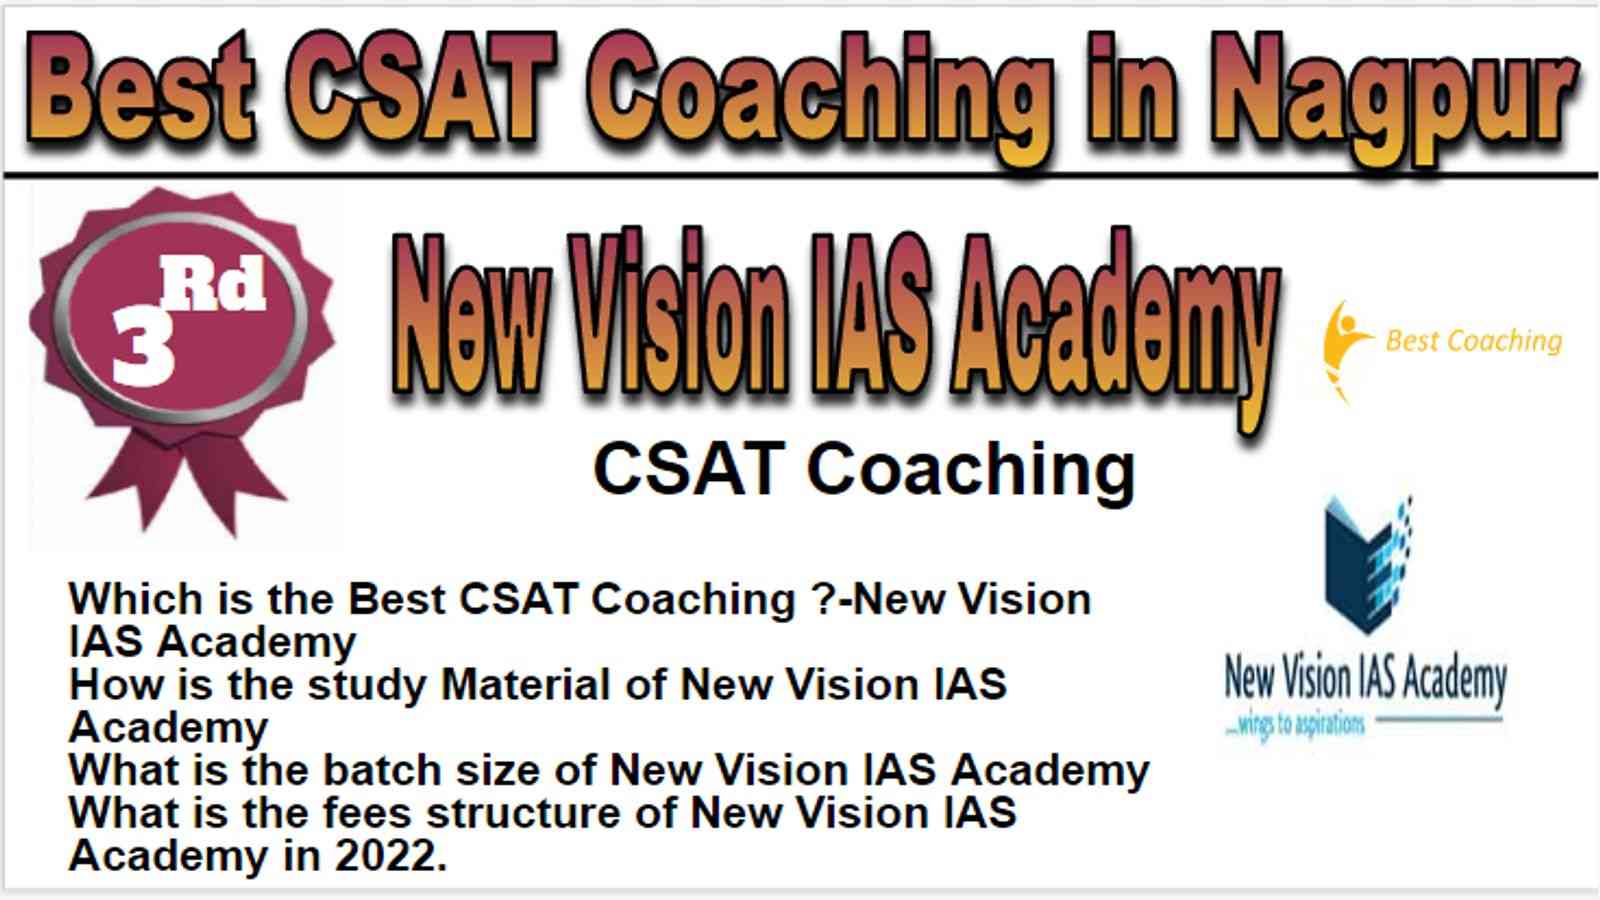 Rank 3 Best CSAT Coaching in Nagpur